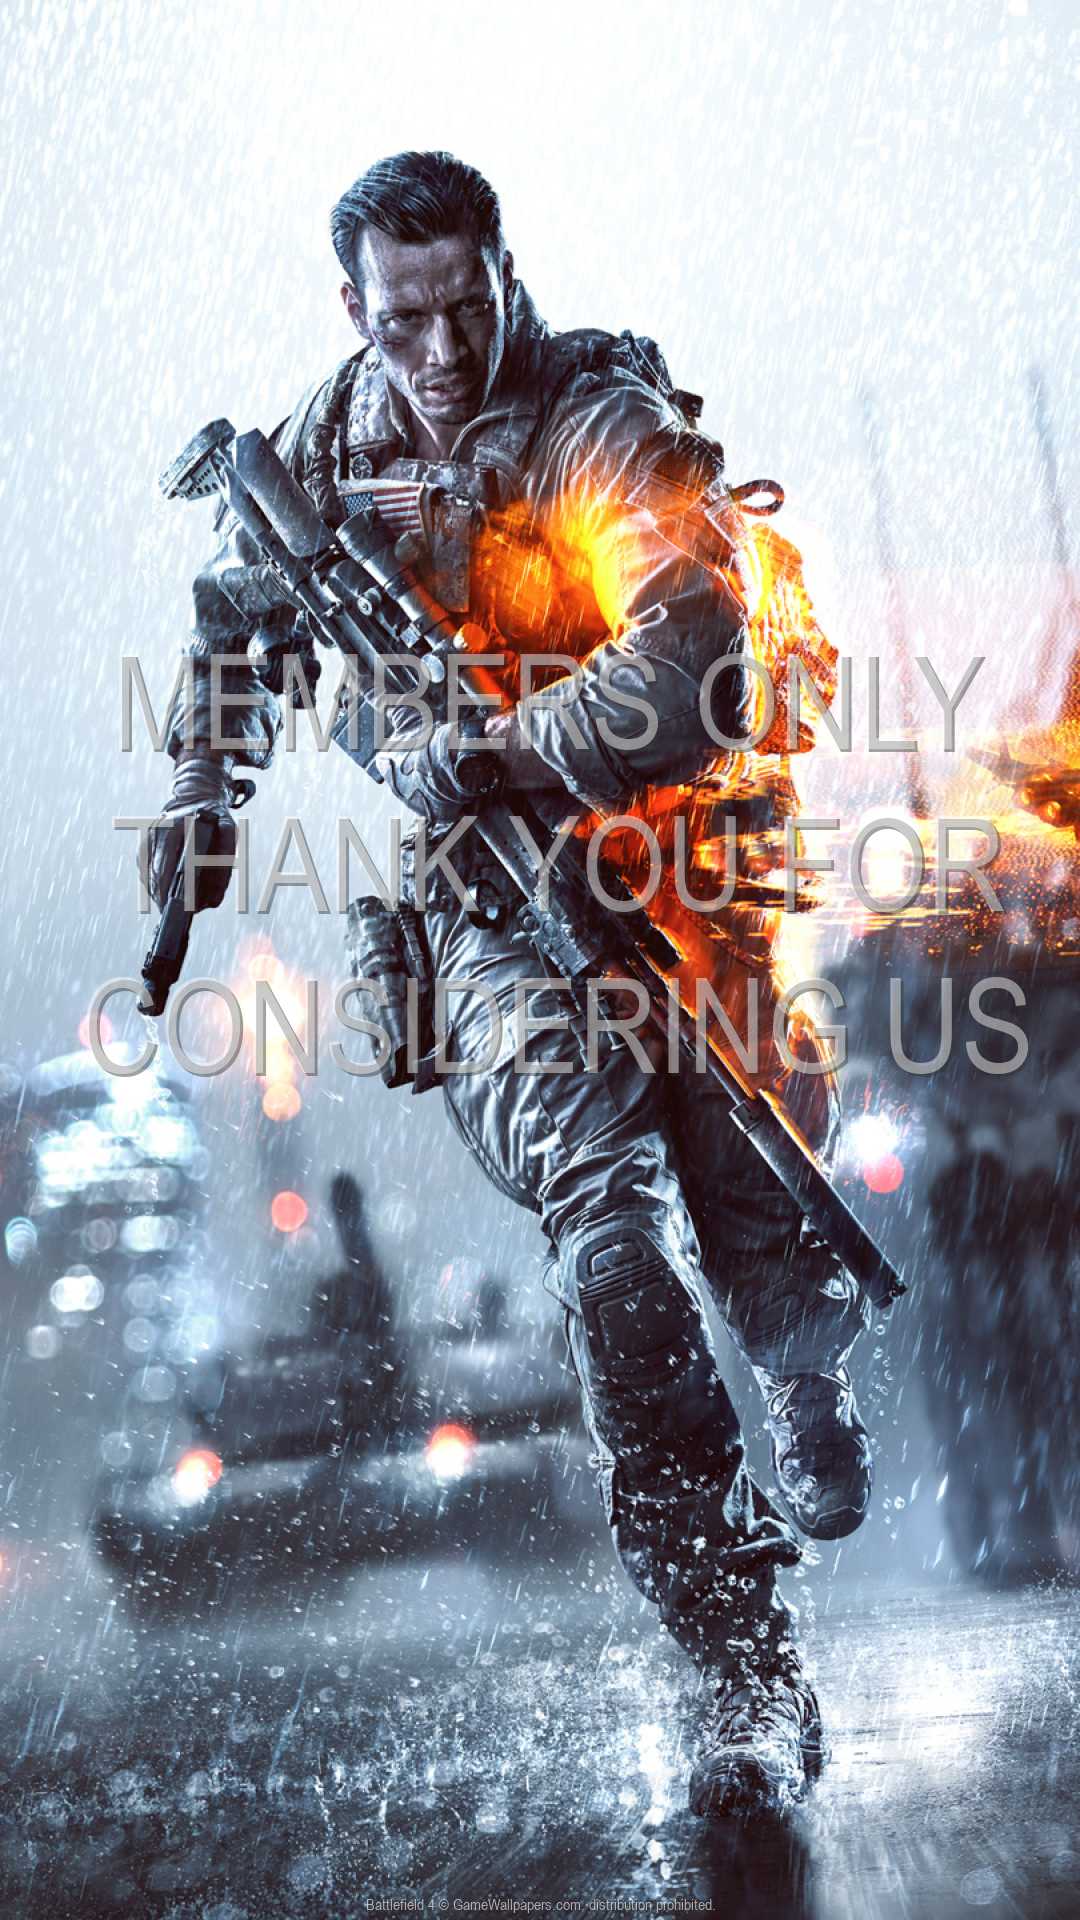 Battlefield 4 1080p%20Vertical Mobile wallpaper or background 01